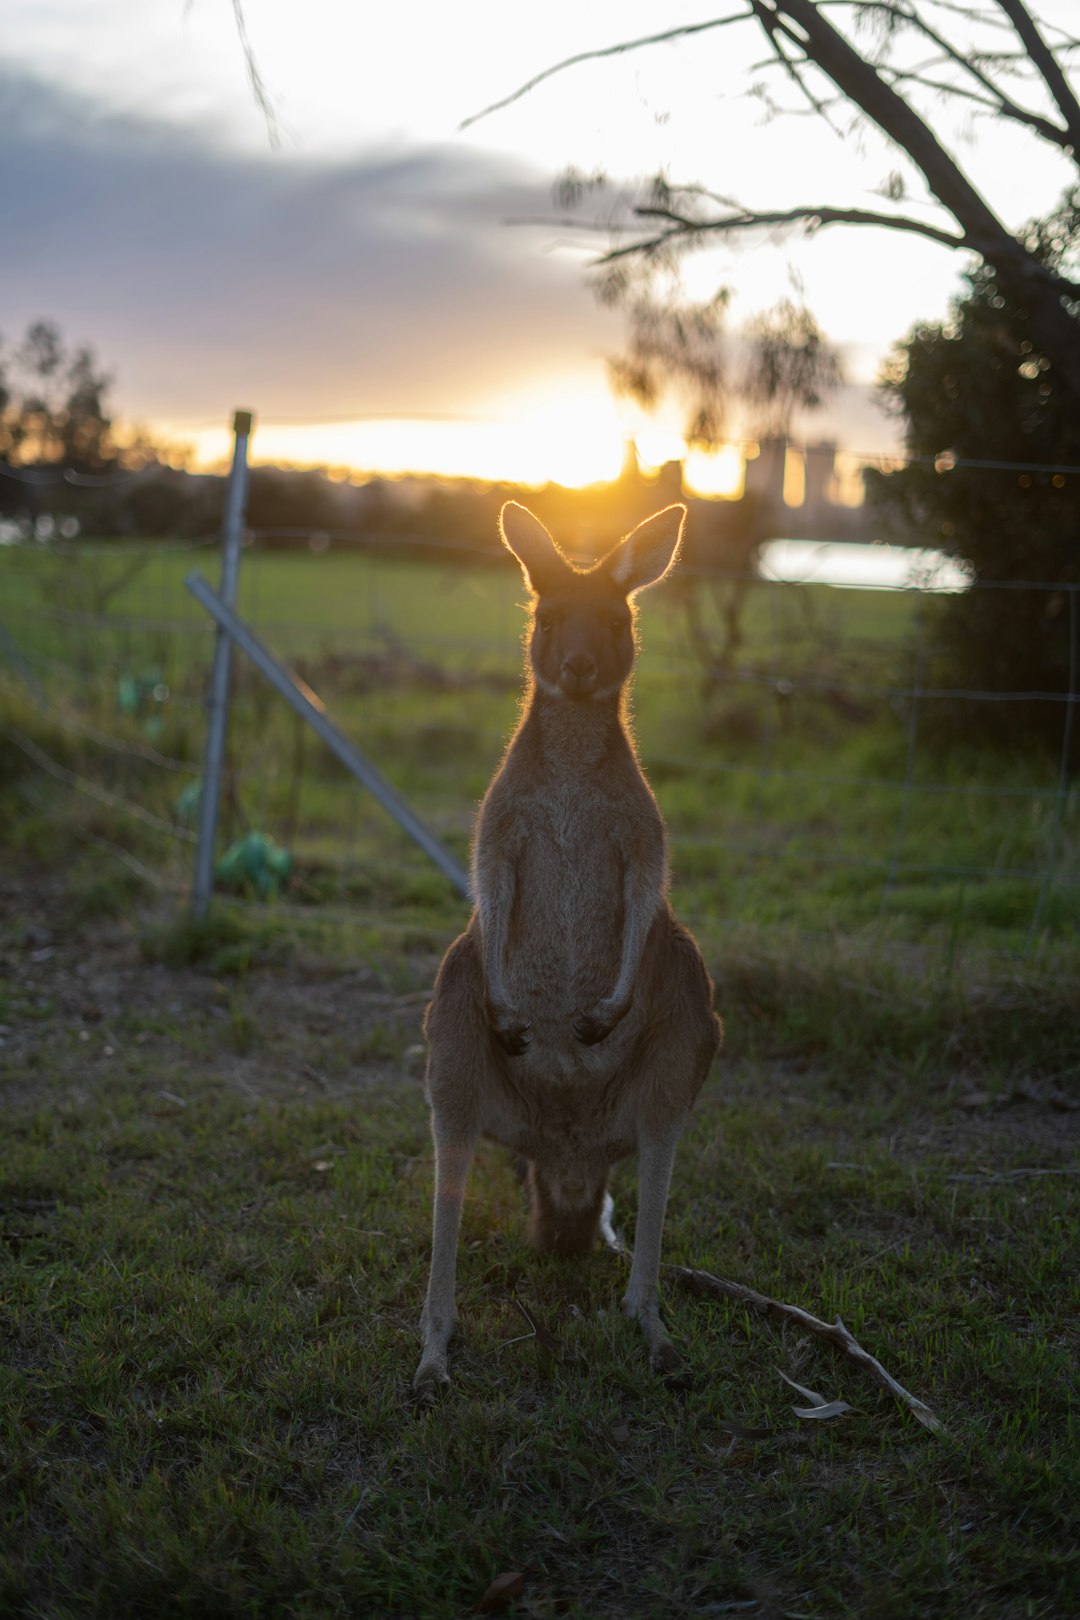 travelers stories about Wildlife in Heirisson Island, Australia